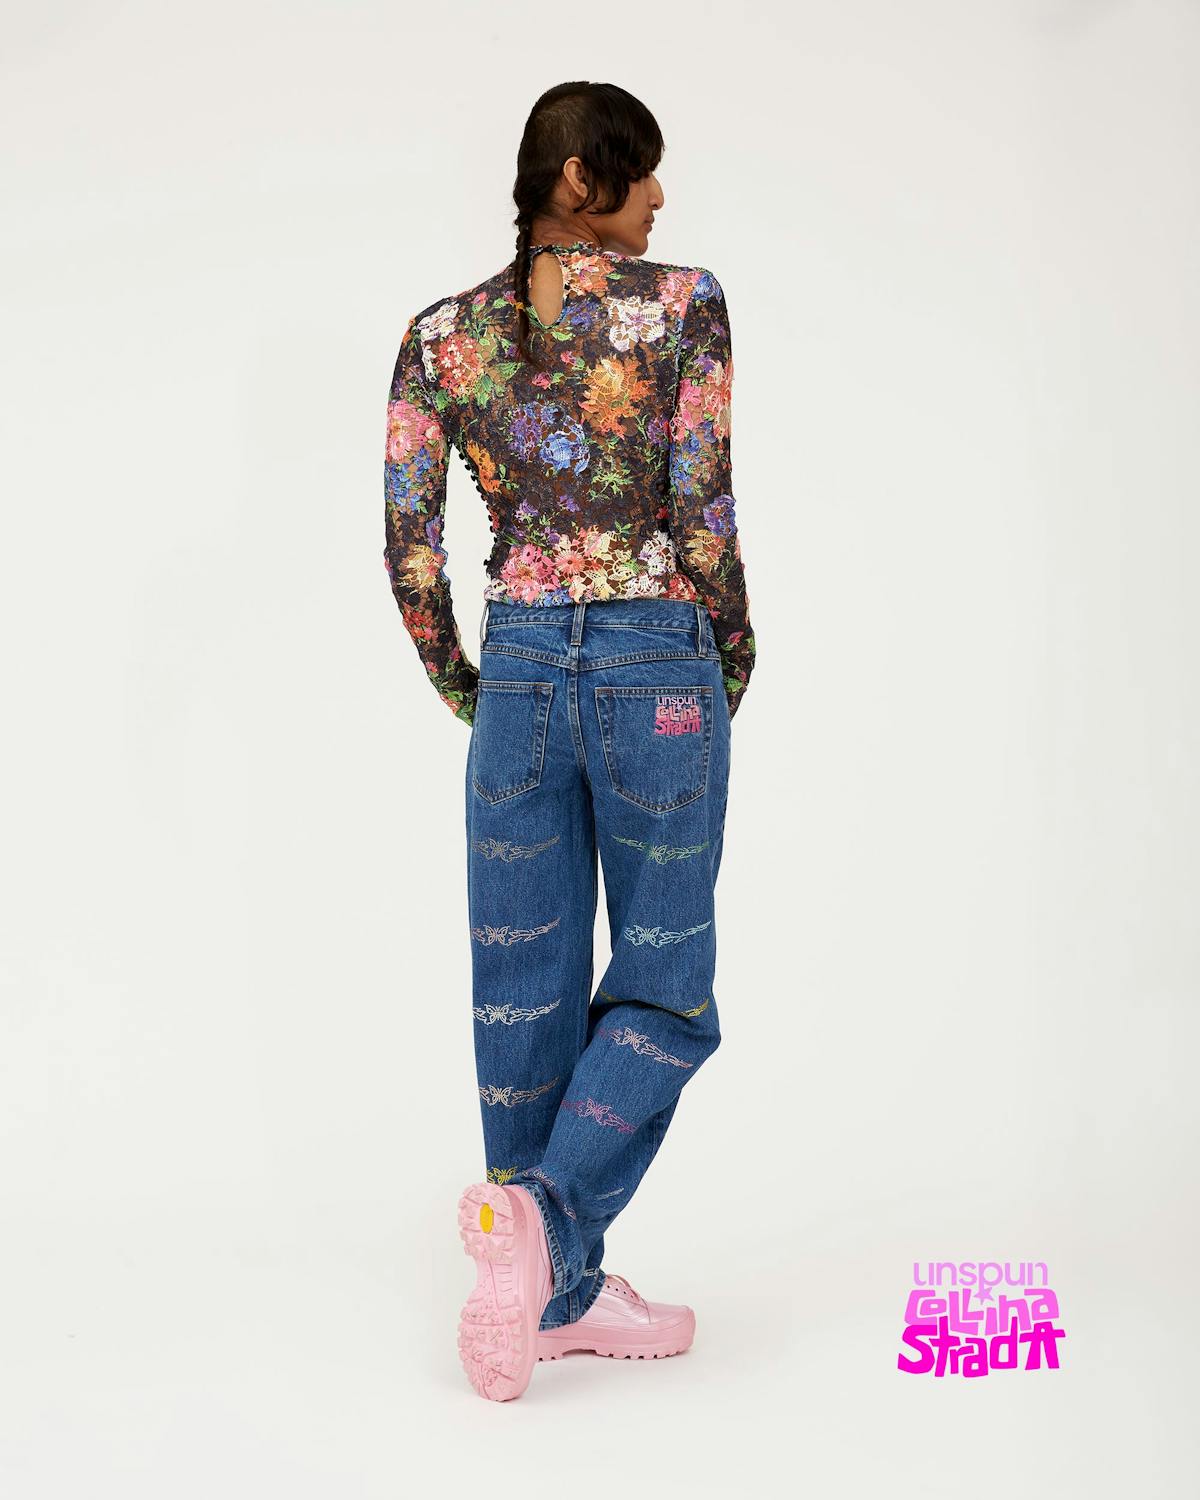 Collina Strada x - Limited edition unspun custom jeans